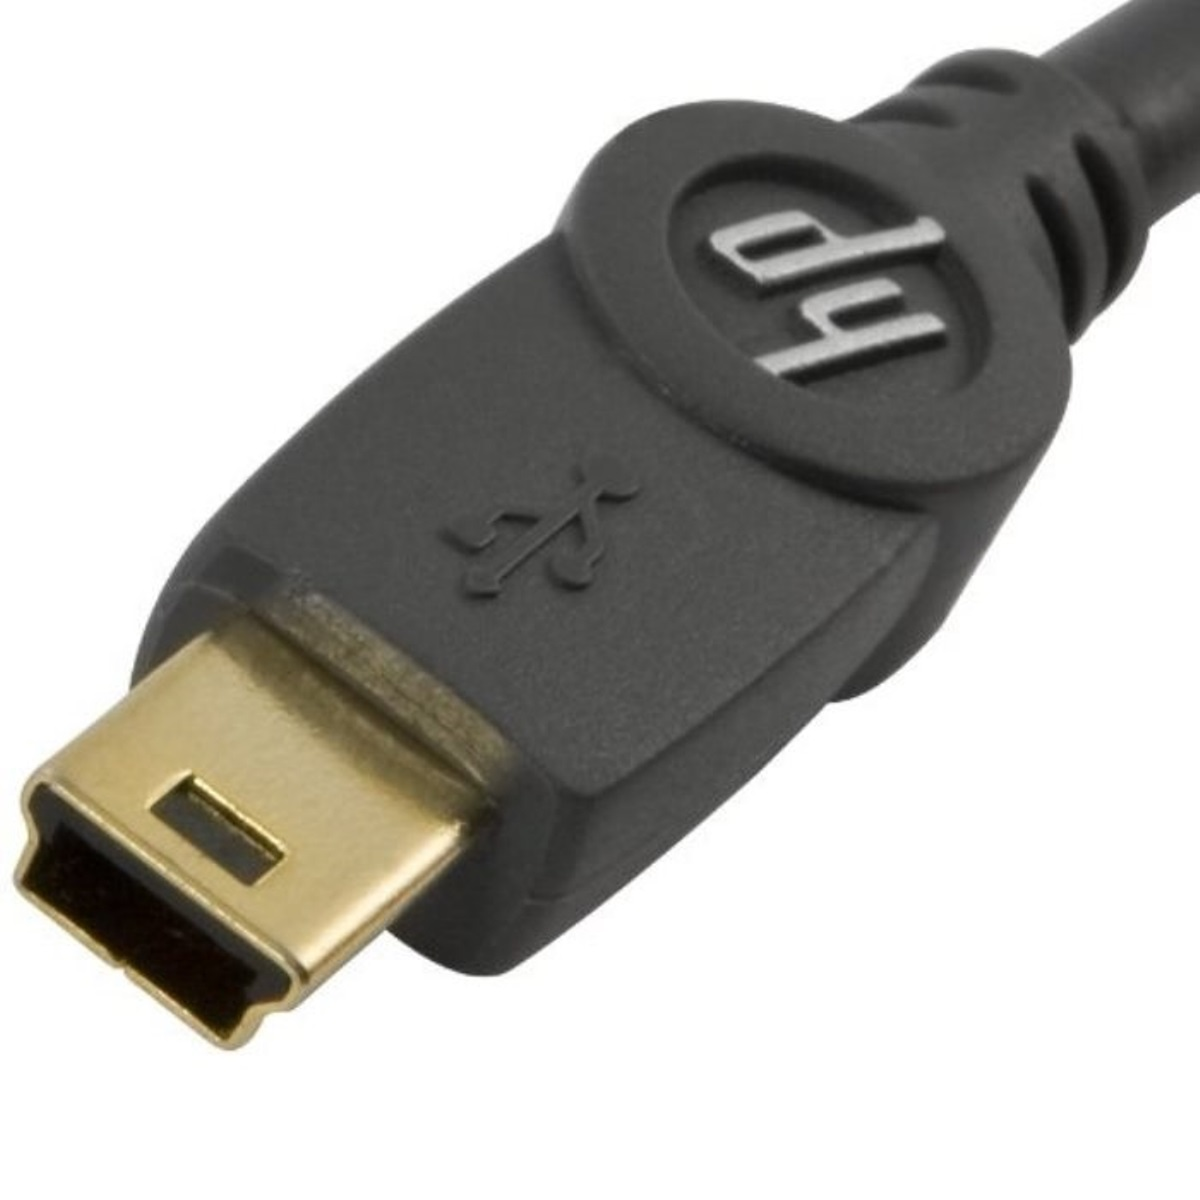 HP 0,9m CABLE MONSTER Schwarz Mini-USB High-Speed Mini-USB-Kabel Kabel,